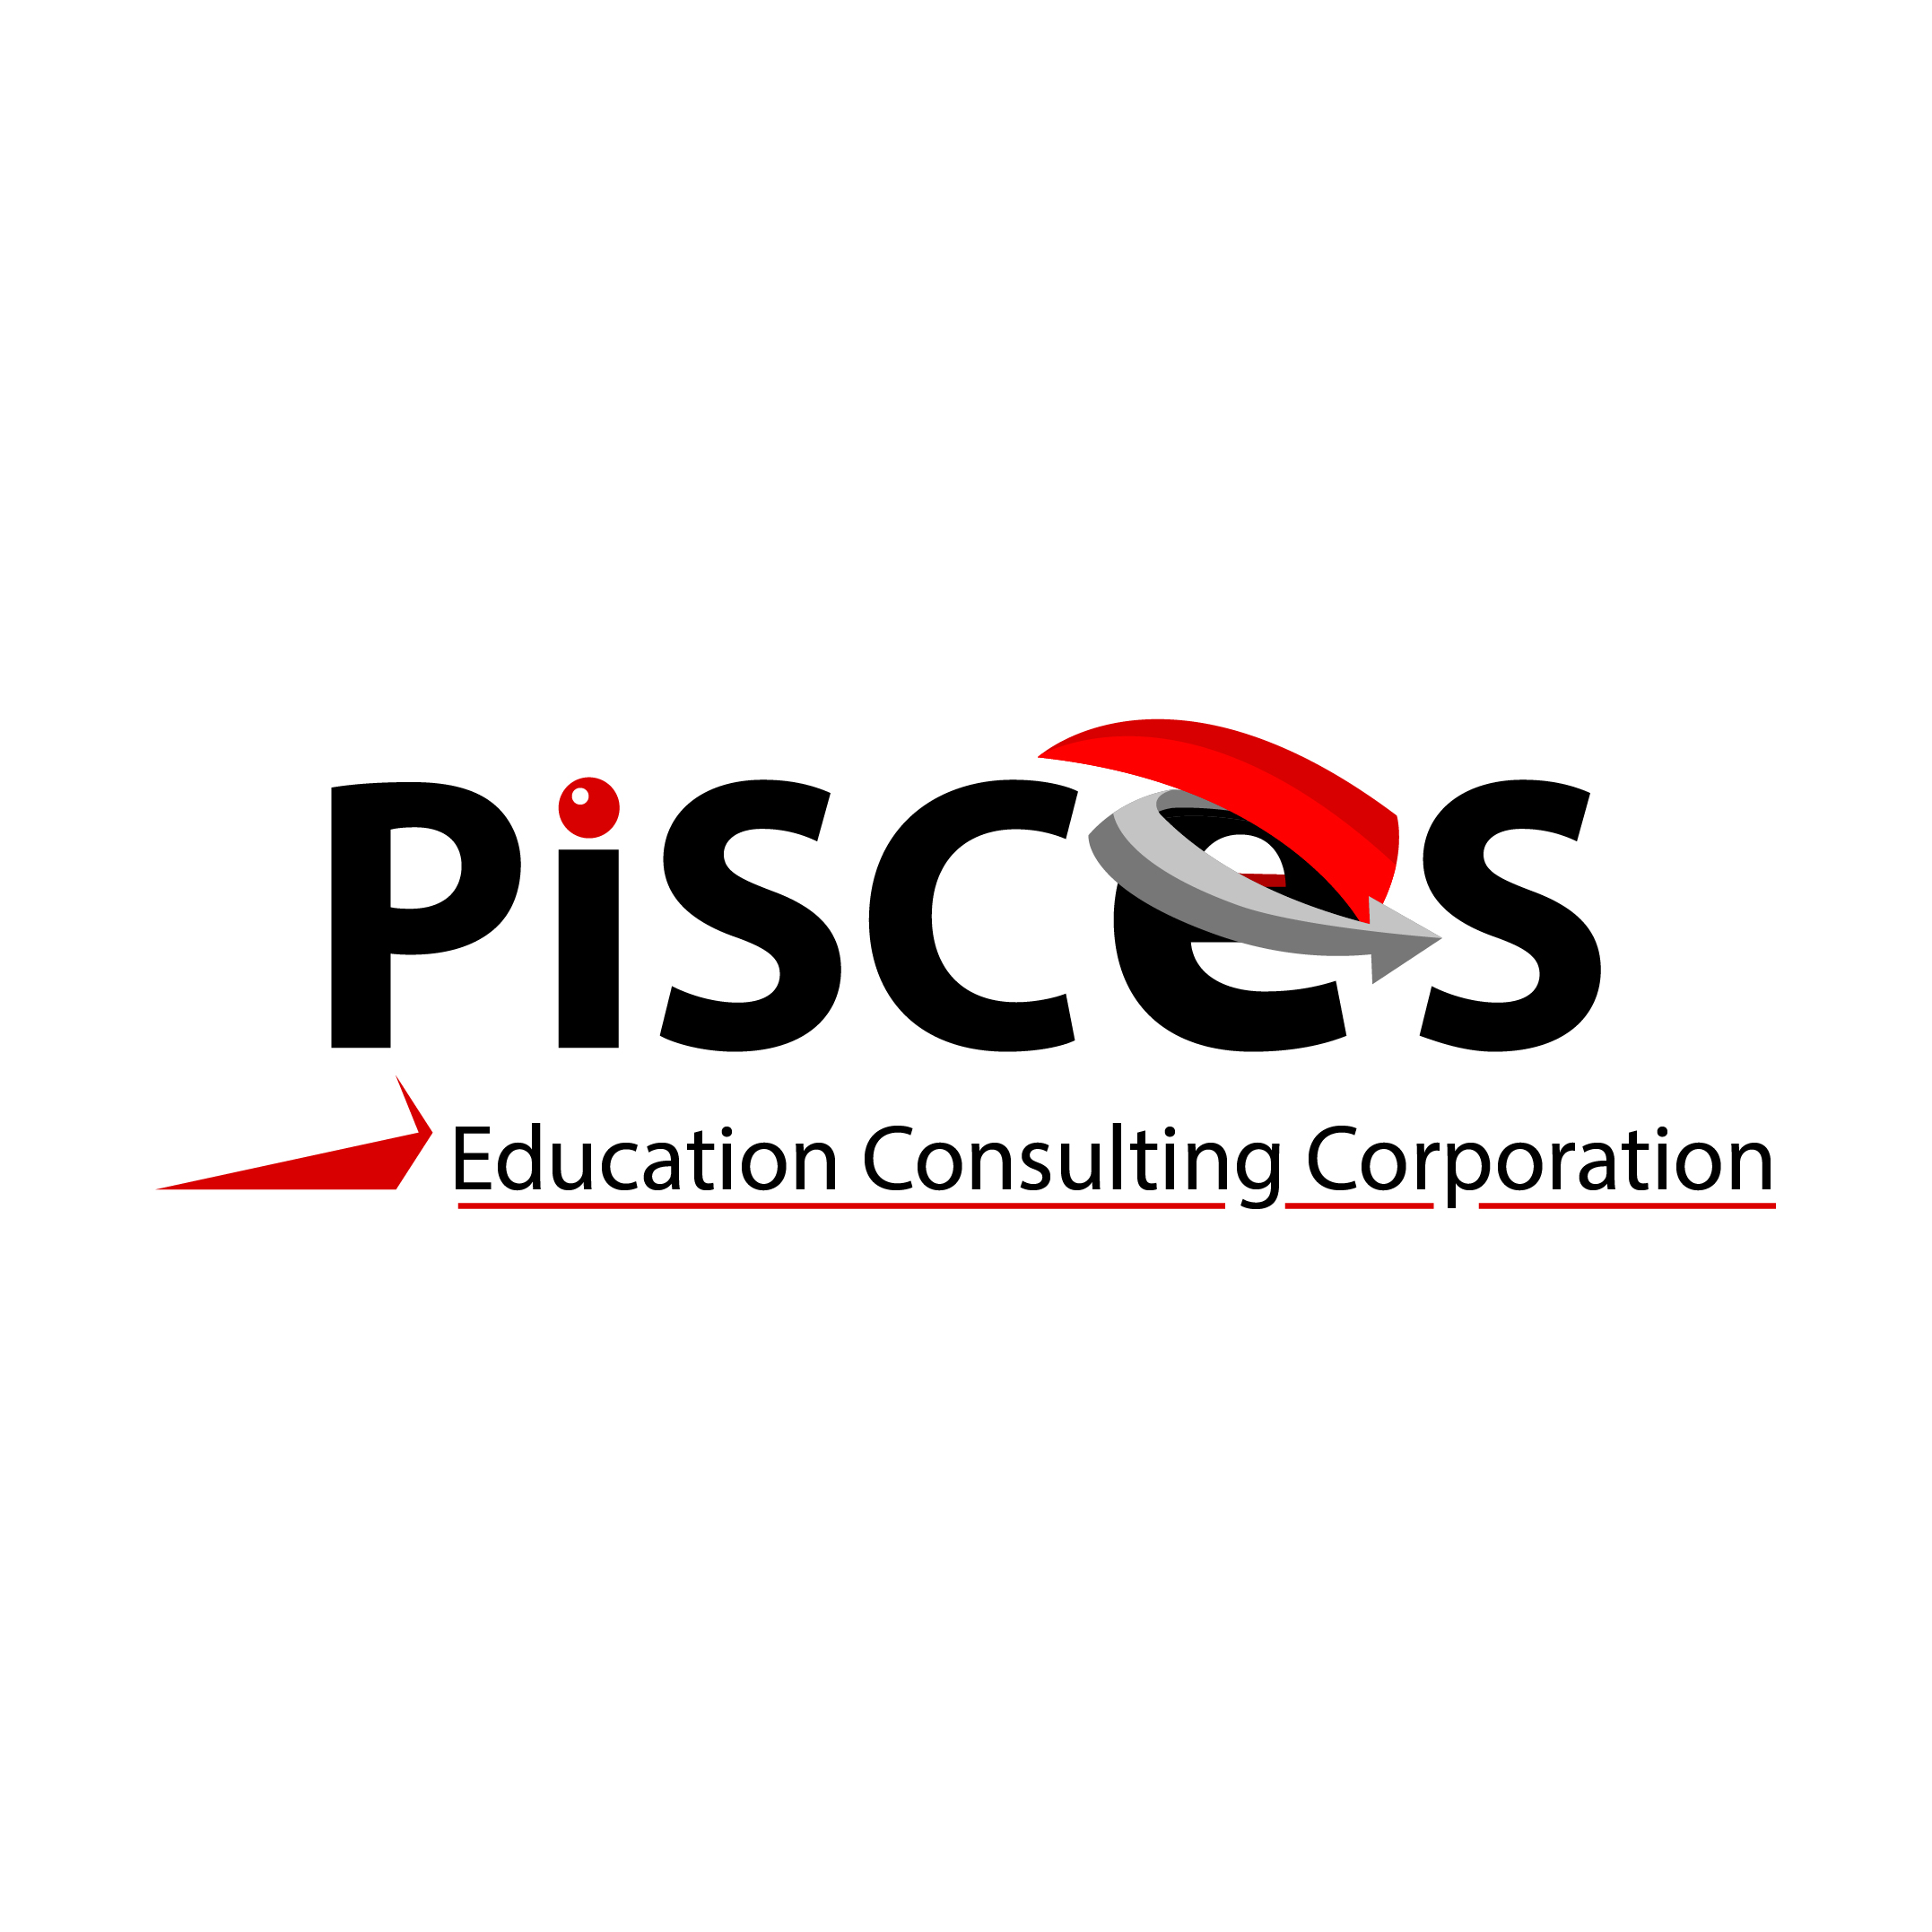 Pisces Education Consulting Corporation Pisces Immigration Inc.